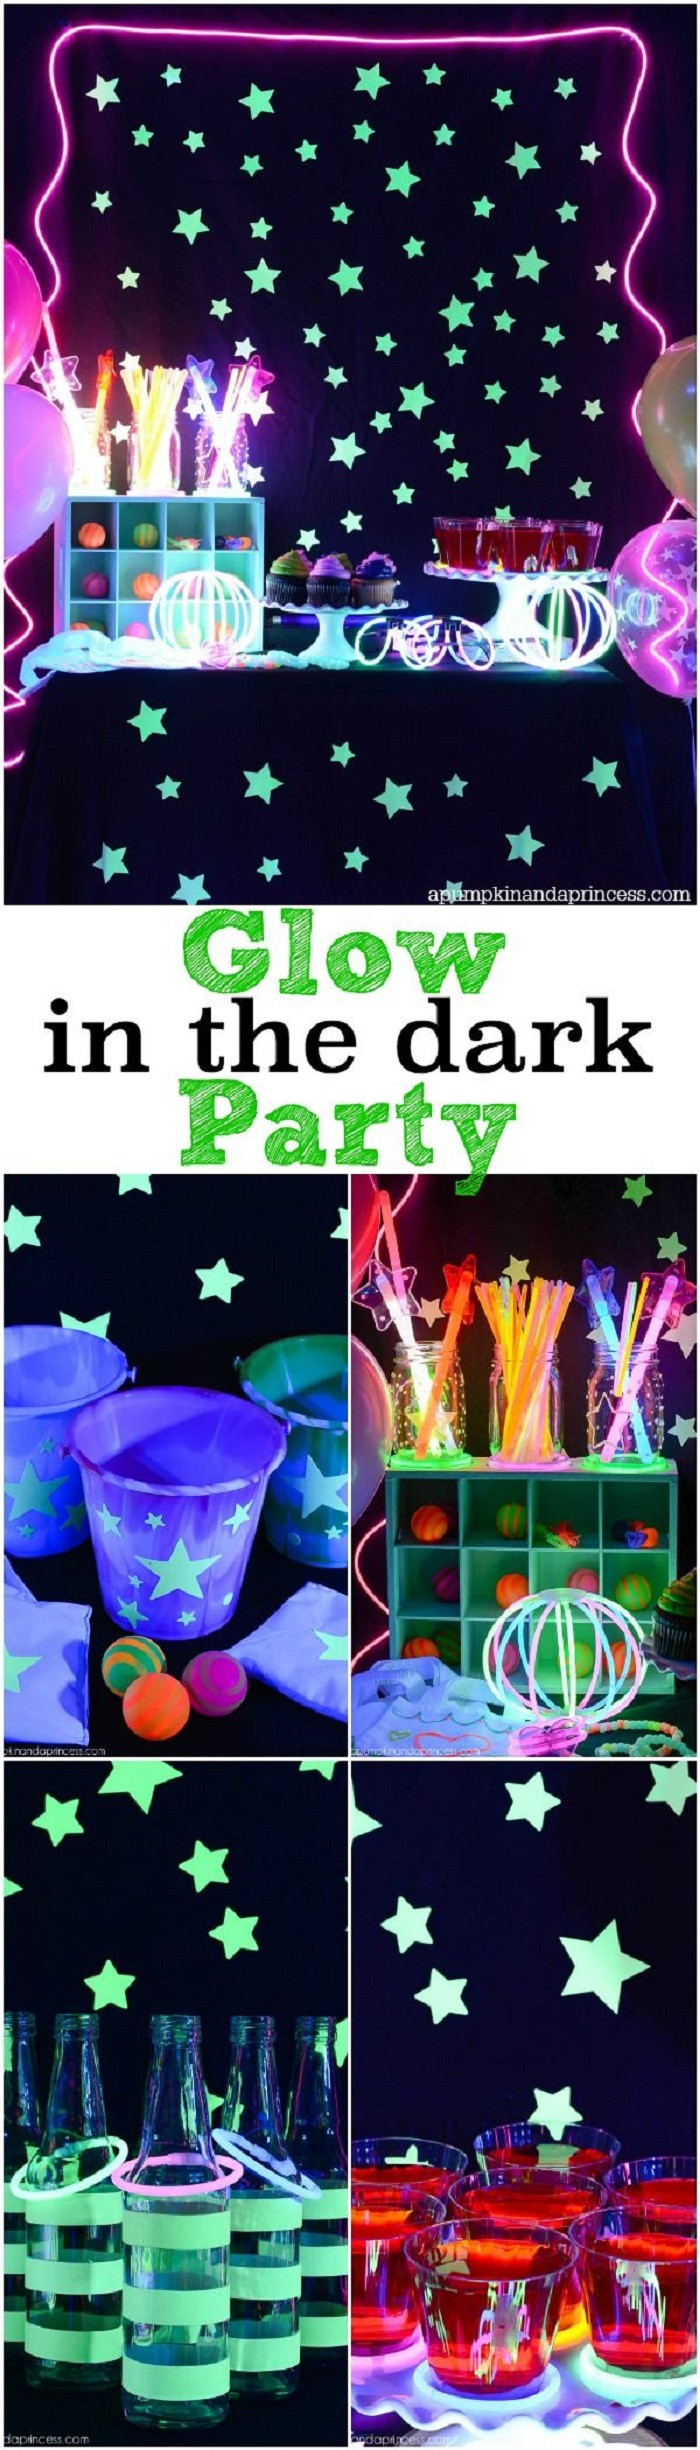 Glow In The Dark Pool Party Ideas
 เปลี่ยนมุมบ้านธรรมดาๆ เป็น มุมปาร์ตี้ ธีมเก๋ ต้อนรับ วันปีใหม่